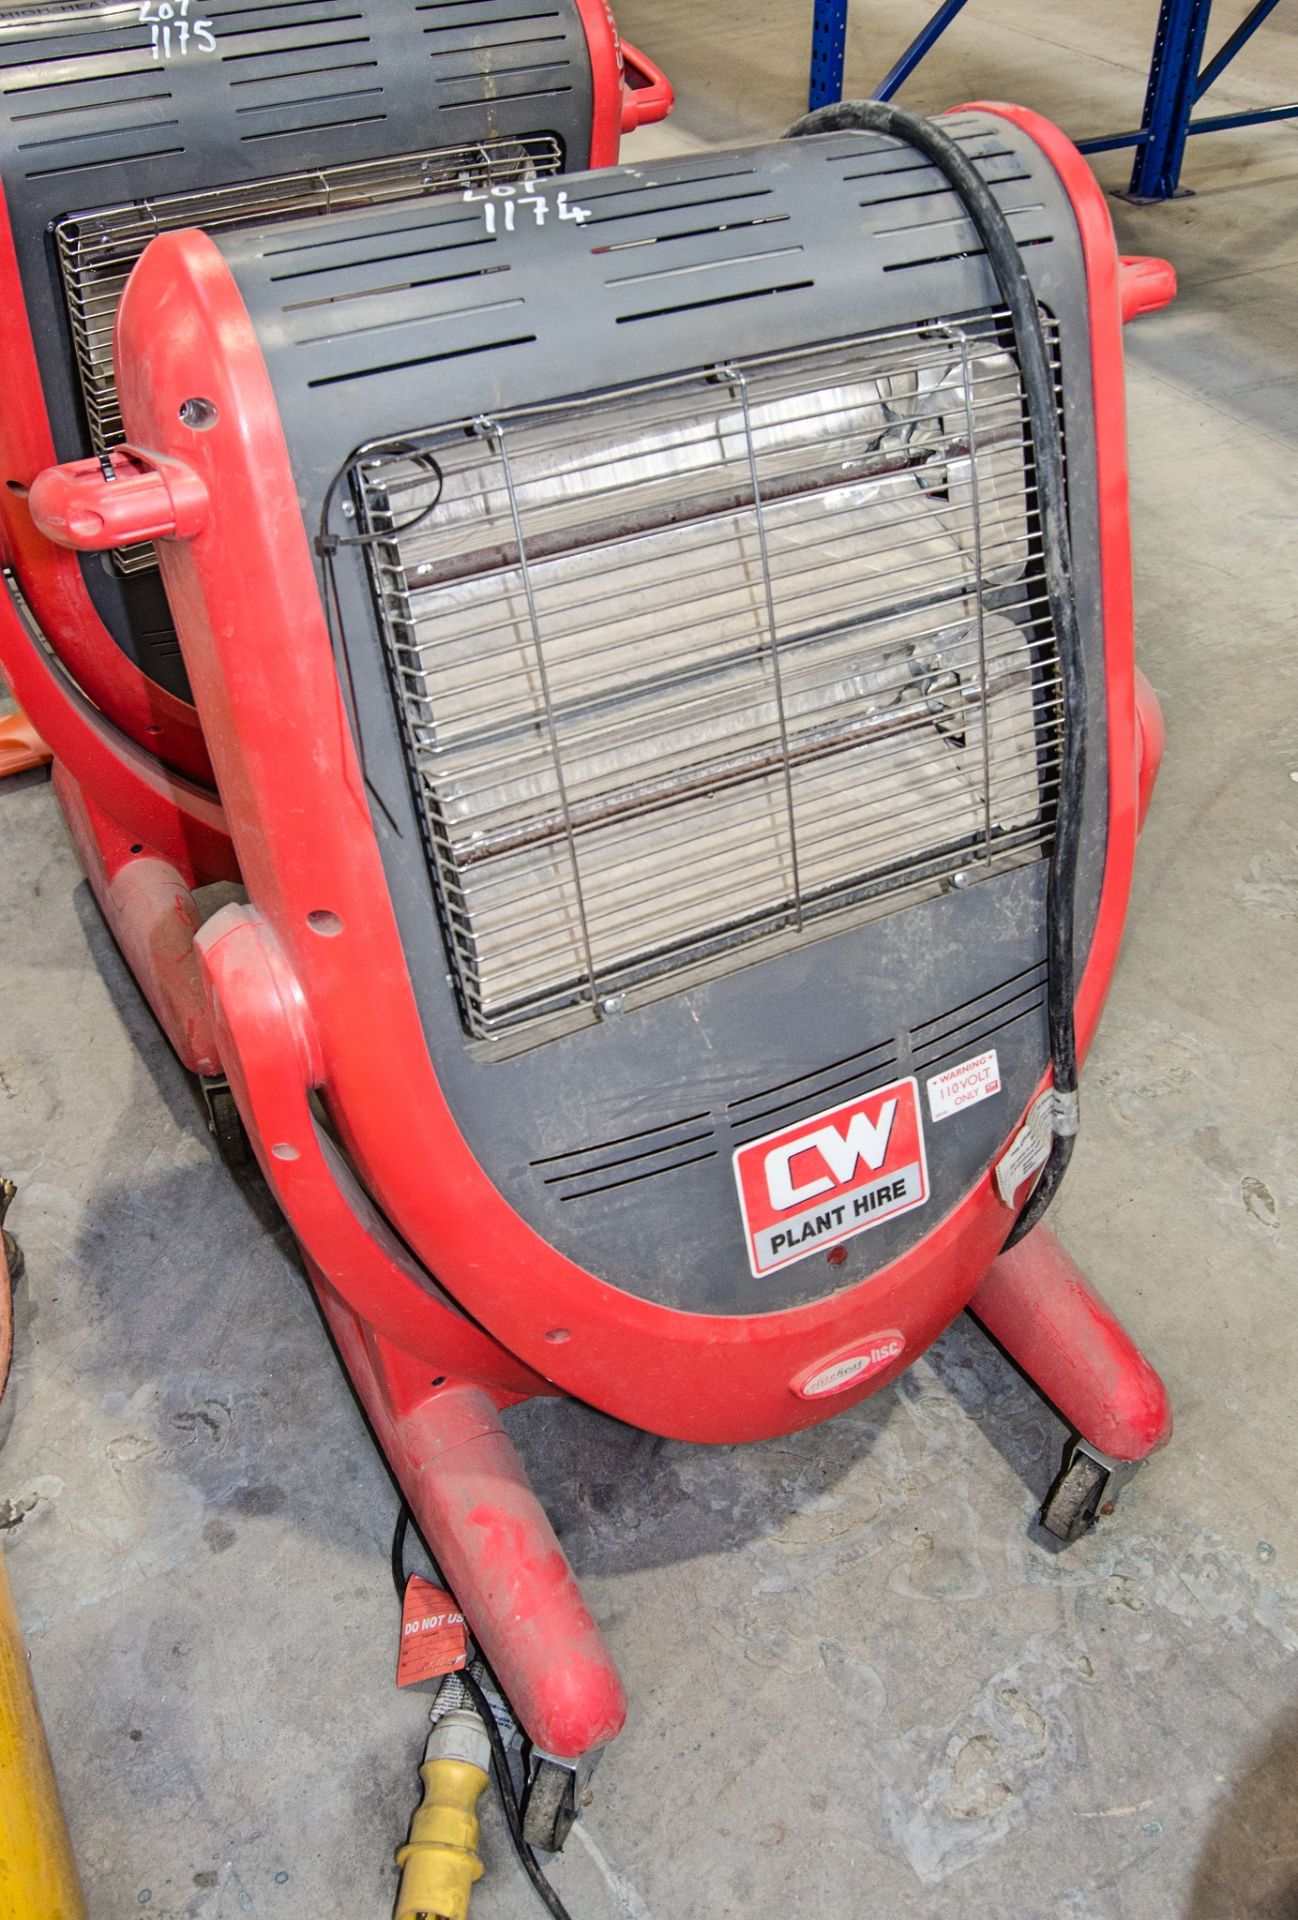 Elite Heat 110v infrared heater CW31714